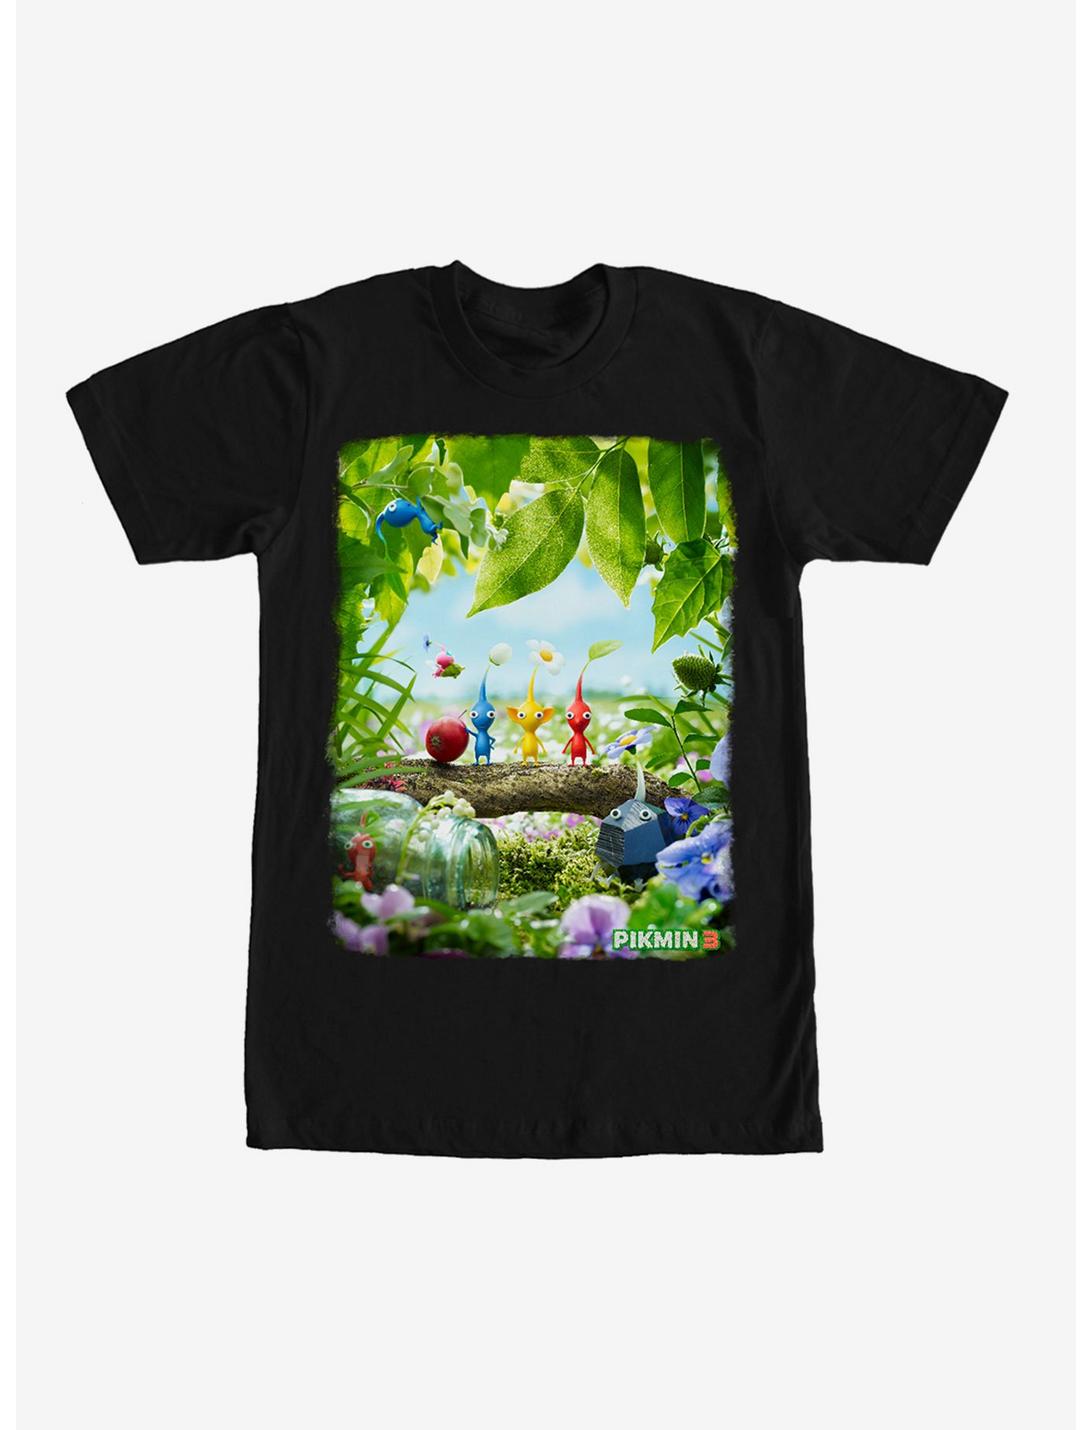 Nintendo Pikmin 3 T-Shirt, BLACK, hi-res